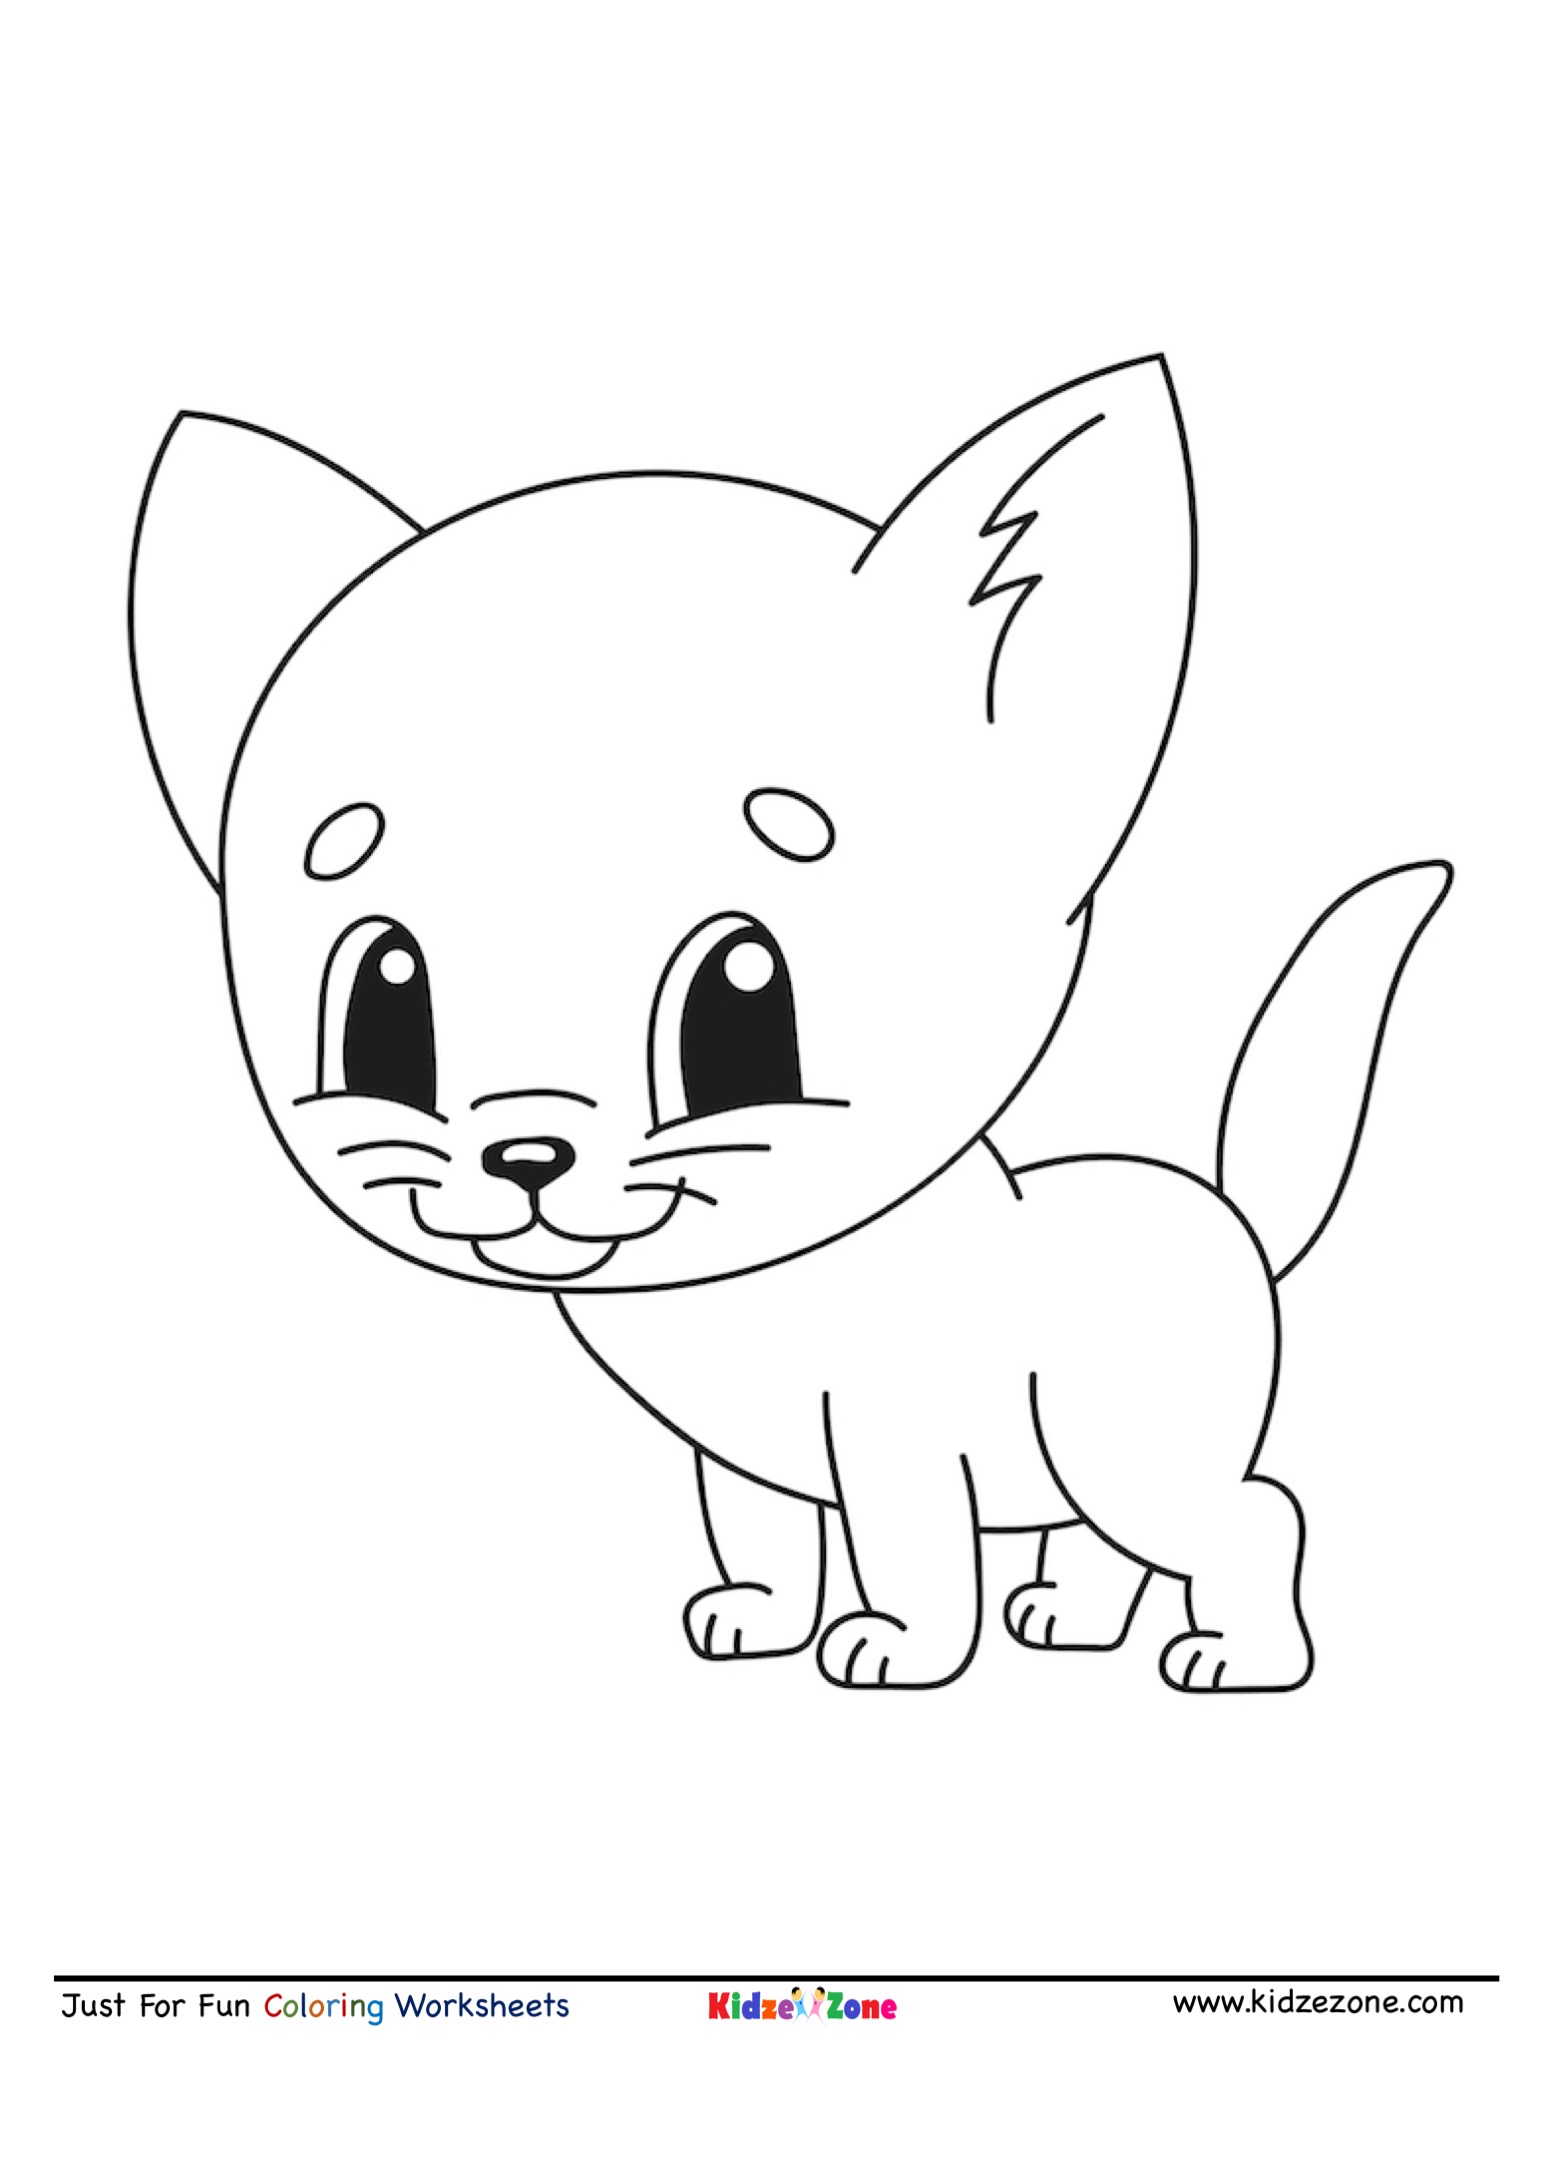 Cute Kitten Cartoon Coloring Page - KidzeZone